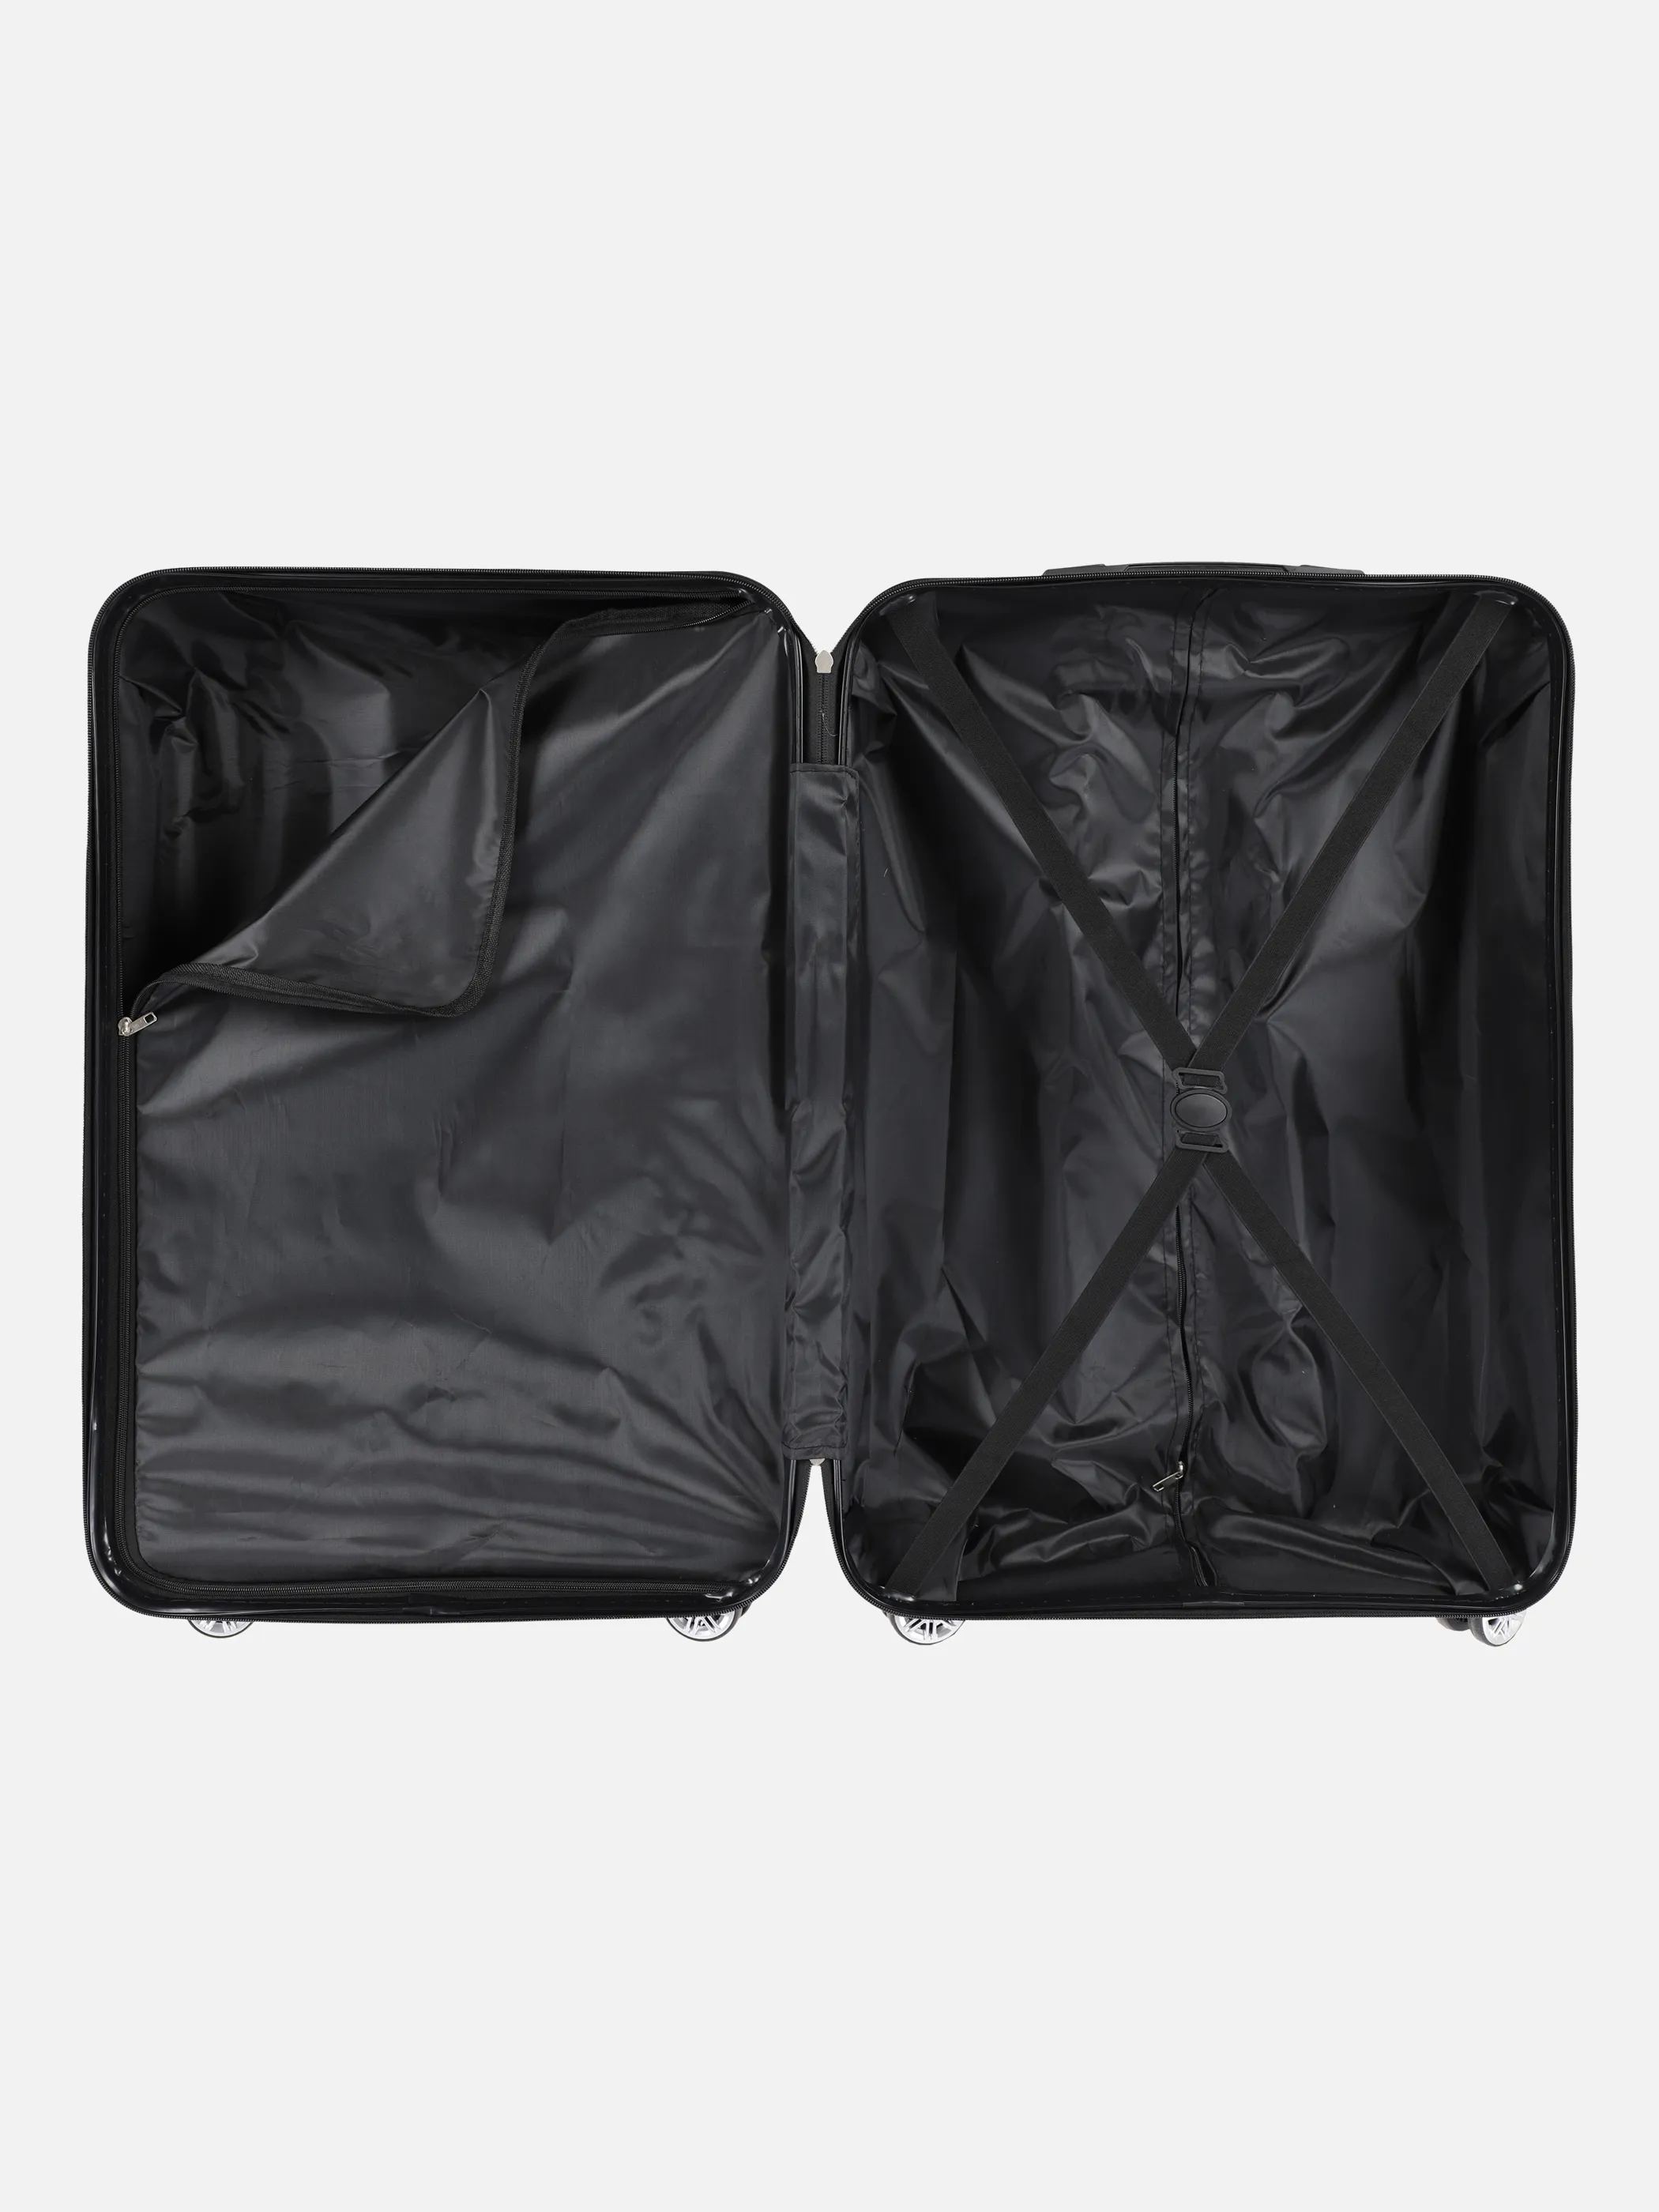 Koffer/Taschen Koffer Avalon Gr. M 67x44x26 Grau 878831 SILBER 3